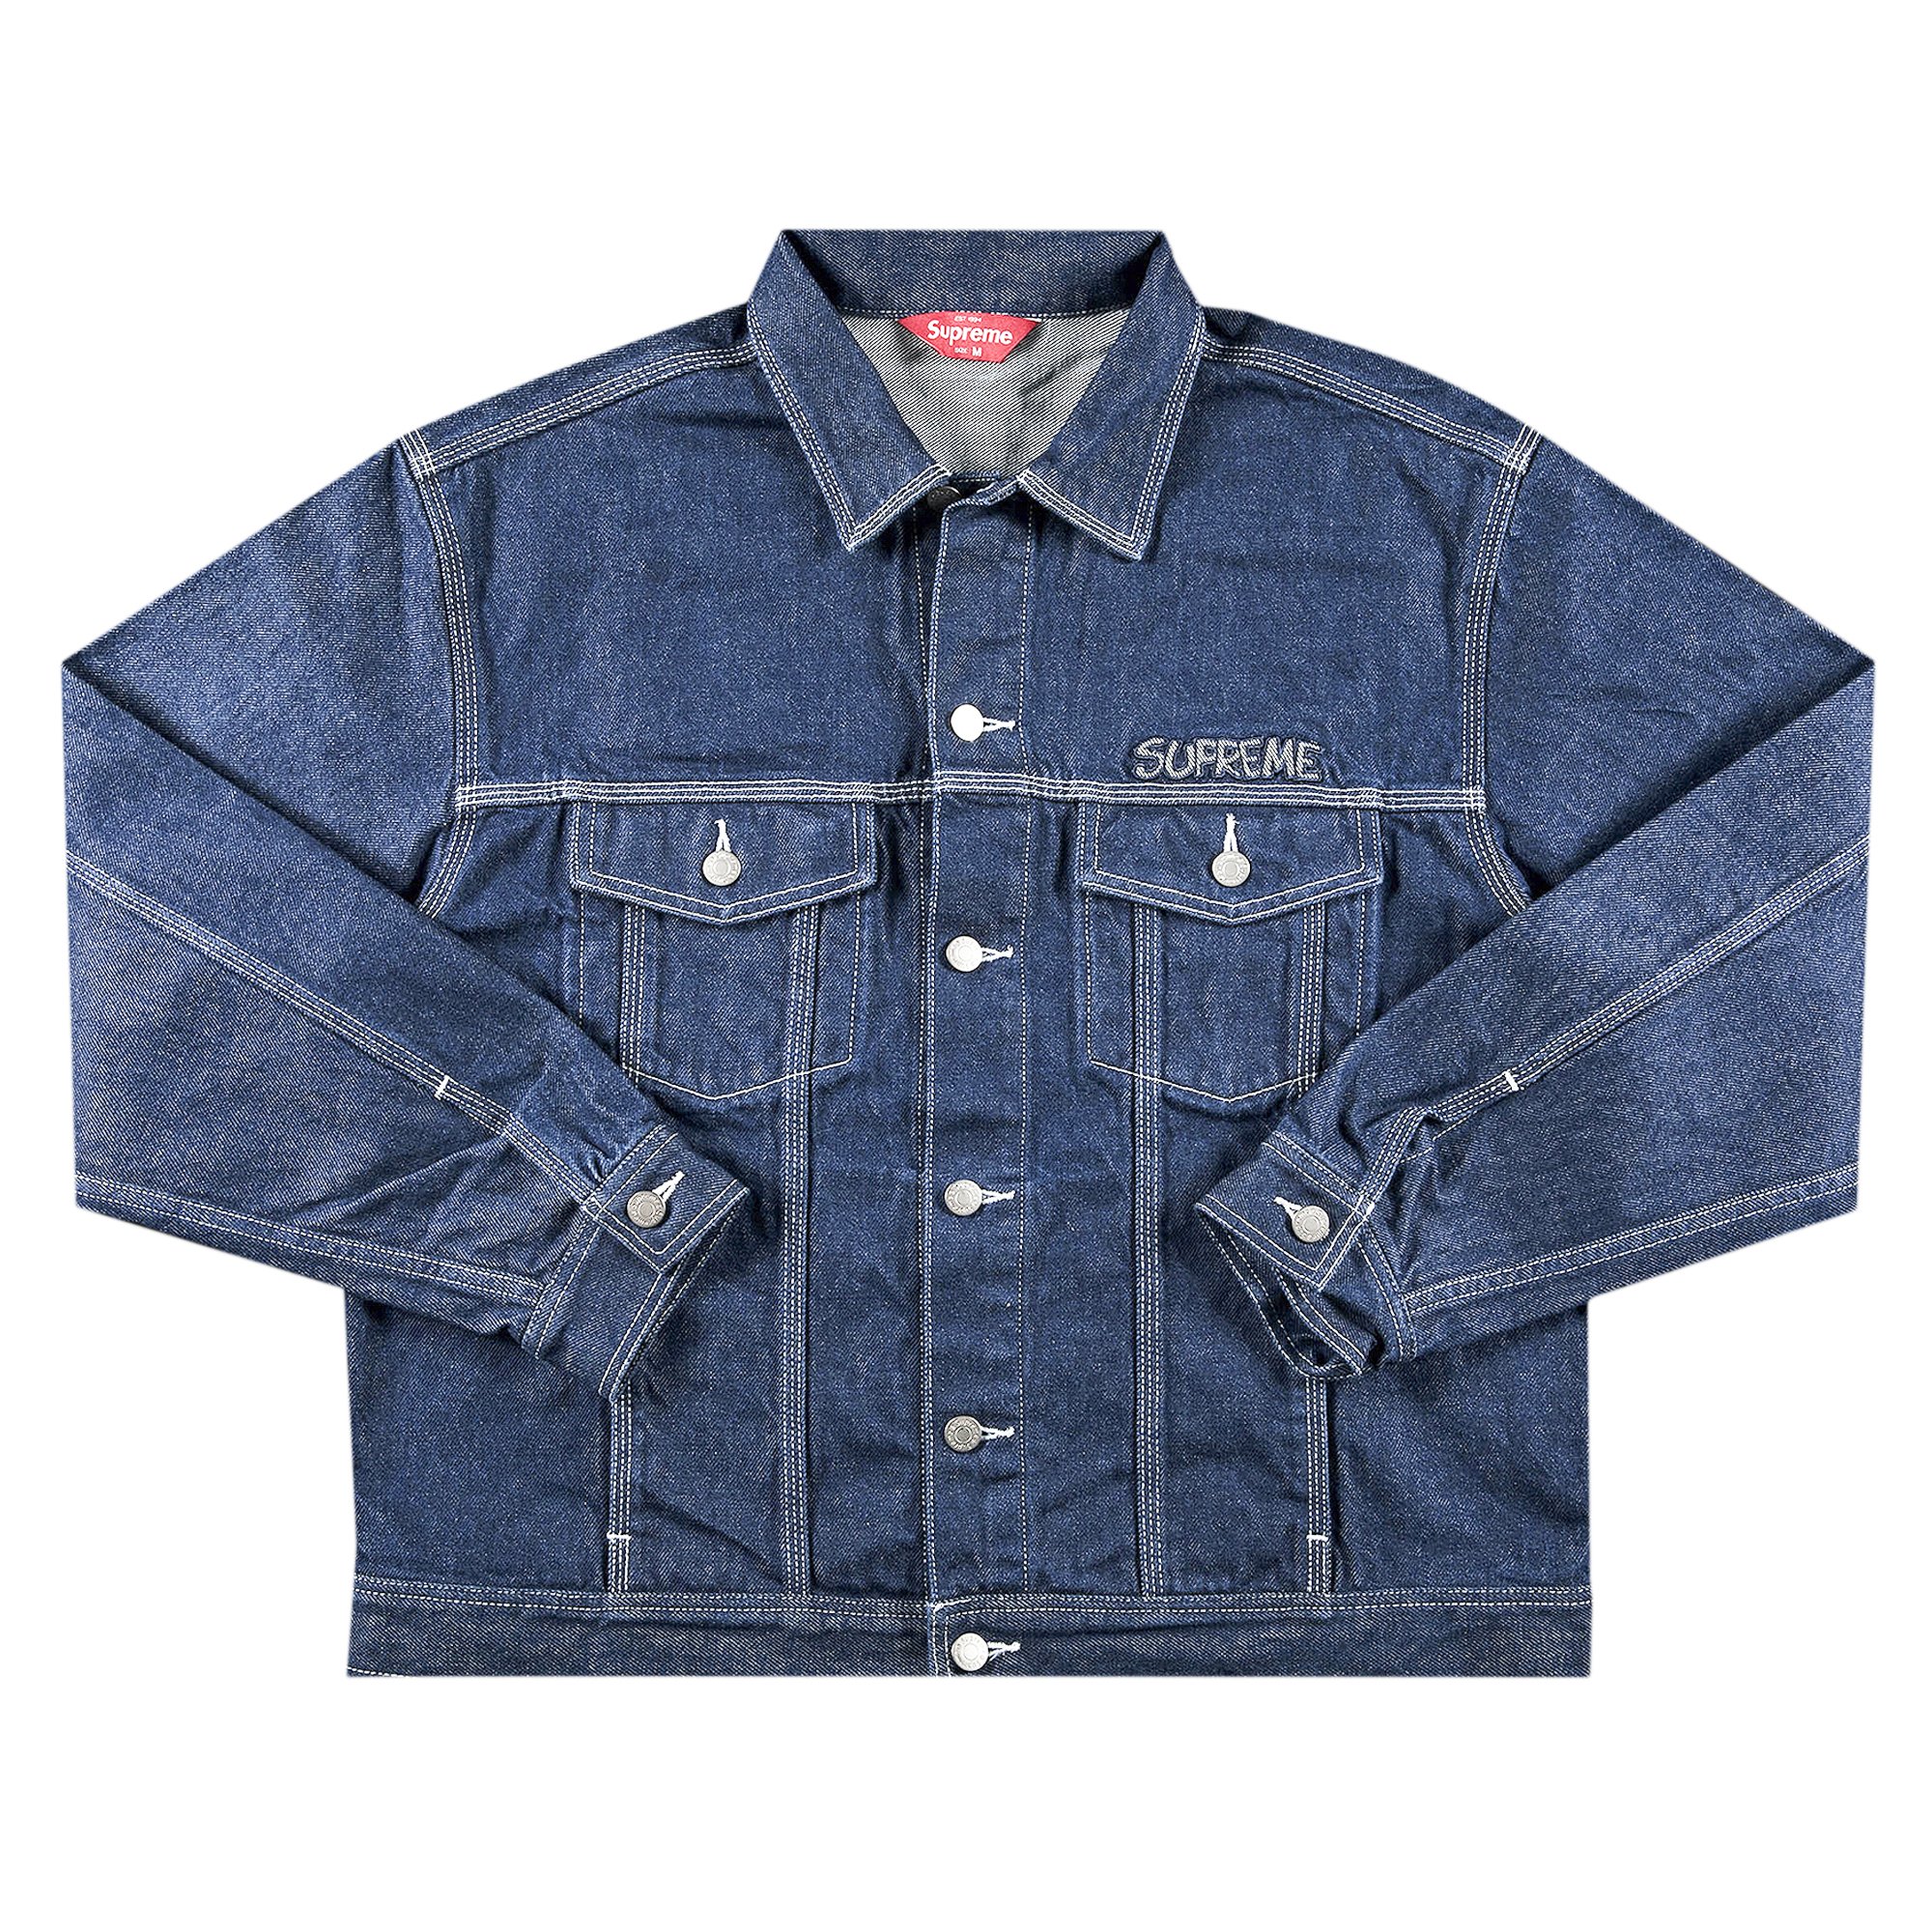 Buy Supreme x Smurfs Denim Trucker Jacket 'Blue' - FW20J41 BLUE | GOAT